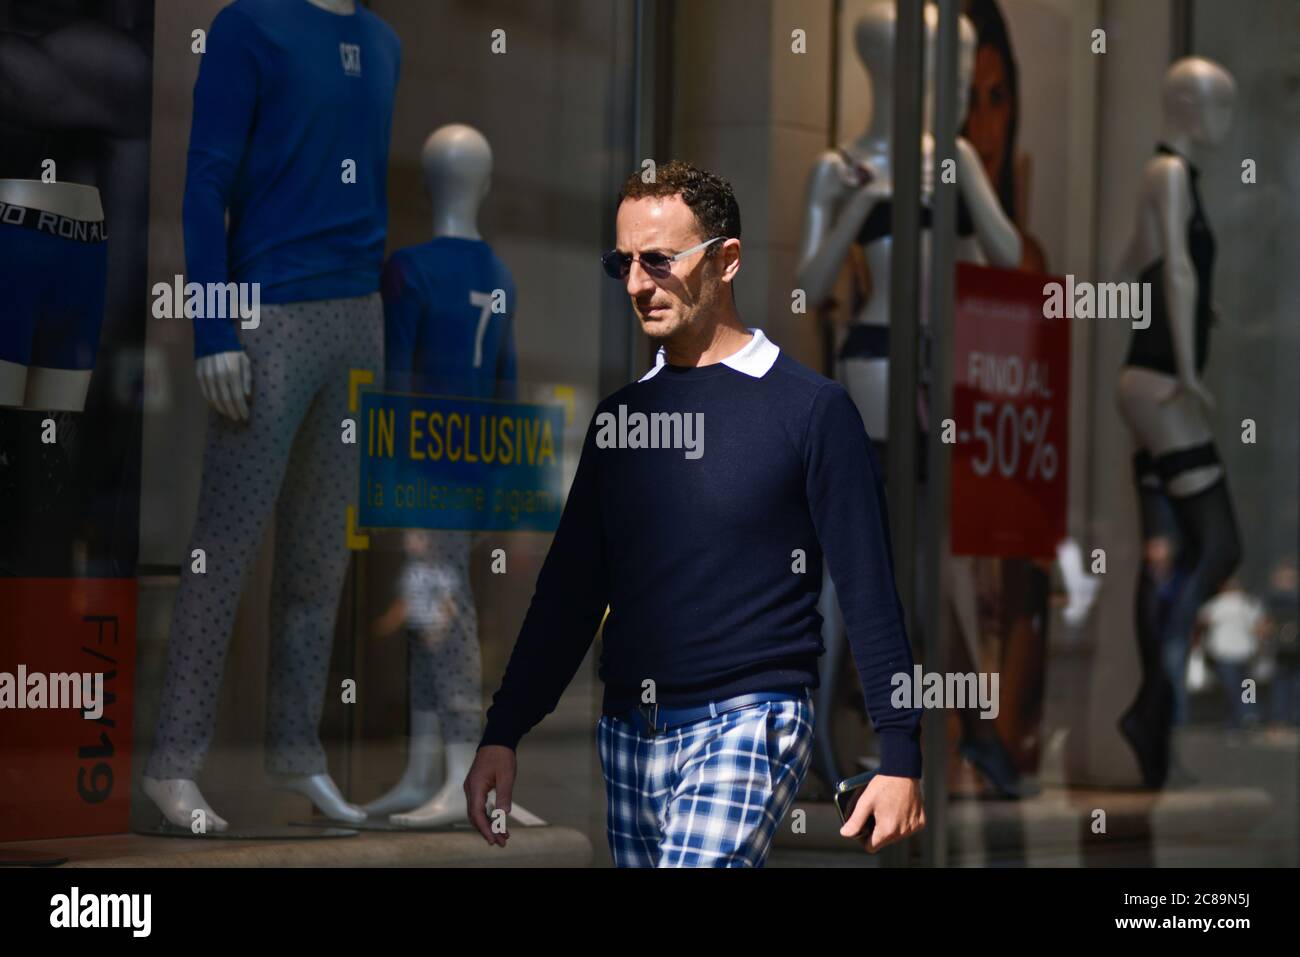 Italian man walking nearby clothes stores, with showcases announcing discounts. Via Sparano da Bari, Bari, Italy Stock Photo